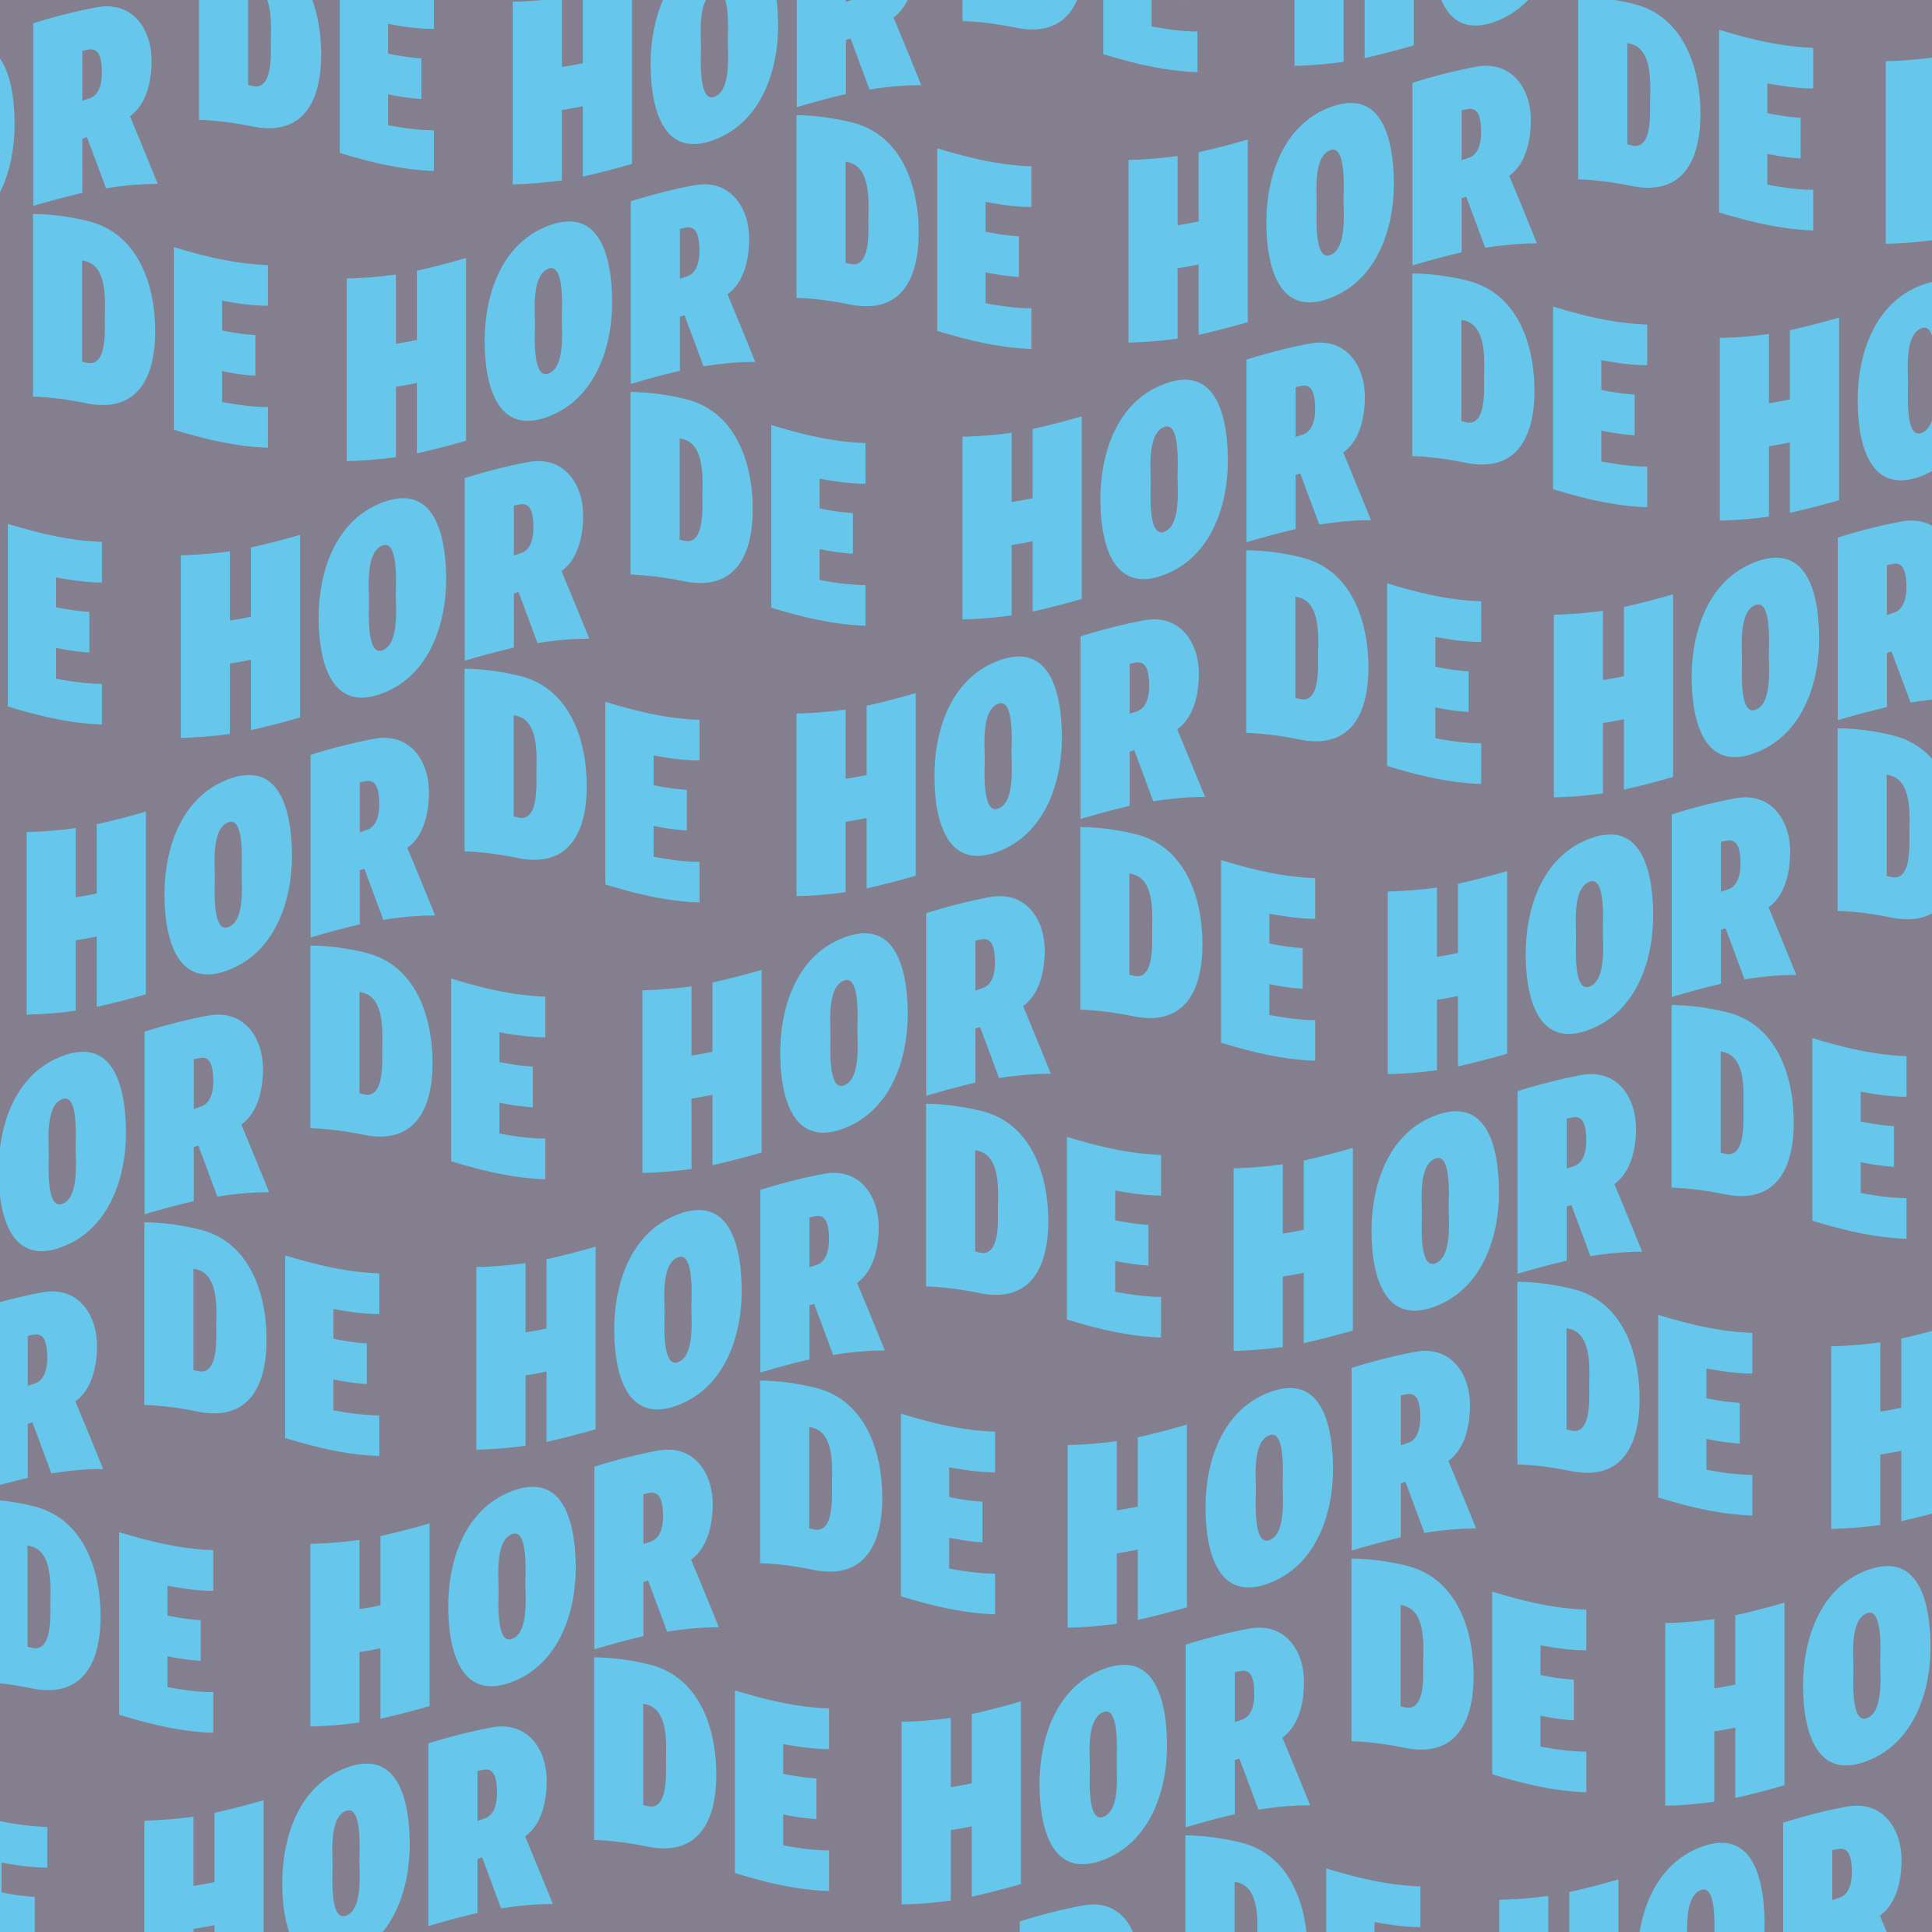 Theatergroep De Horde - logo